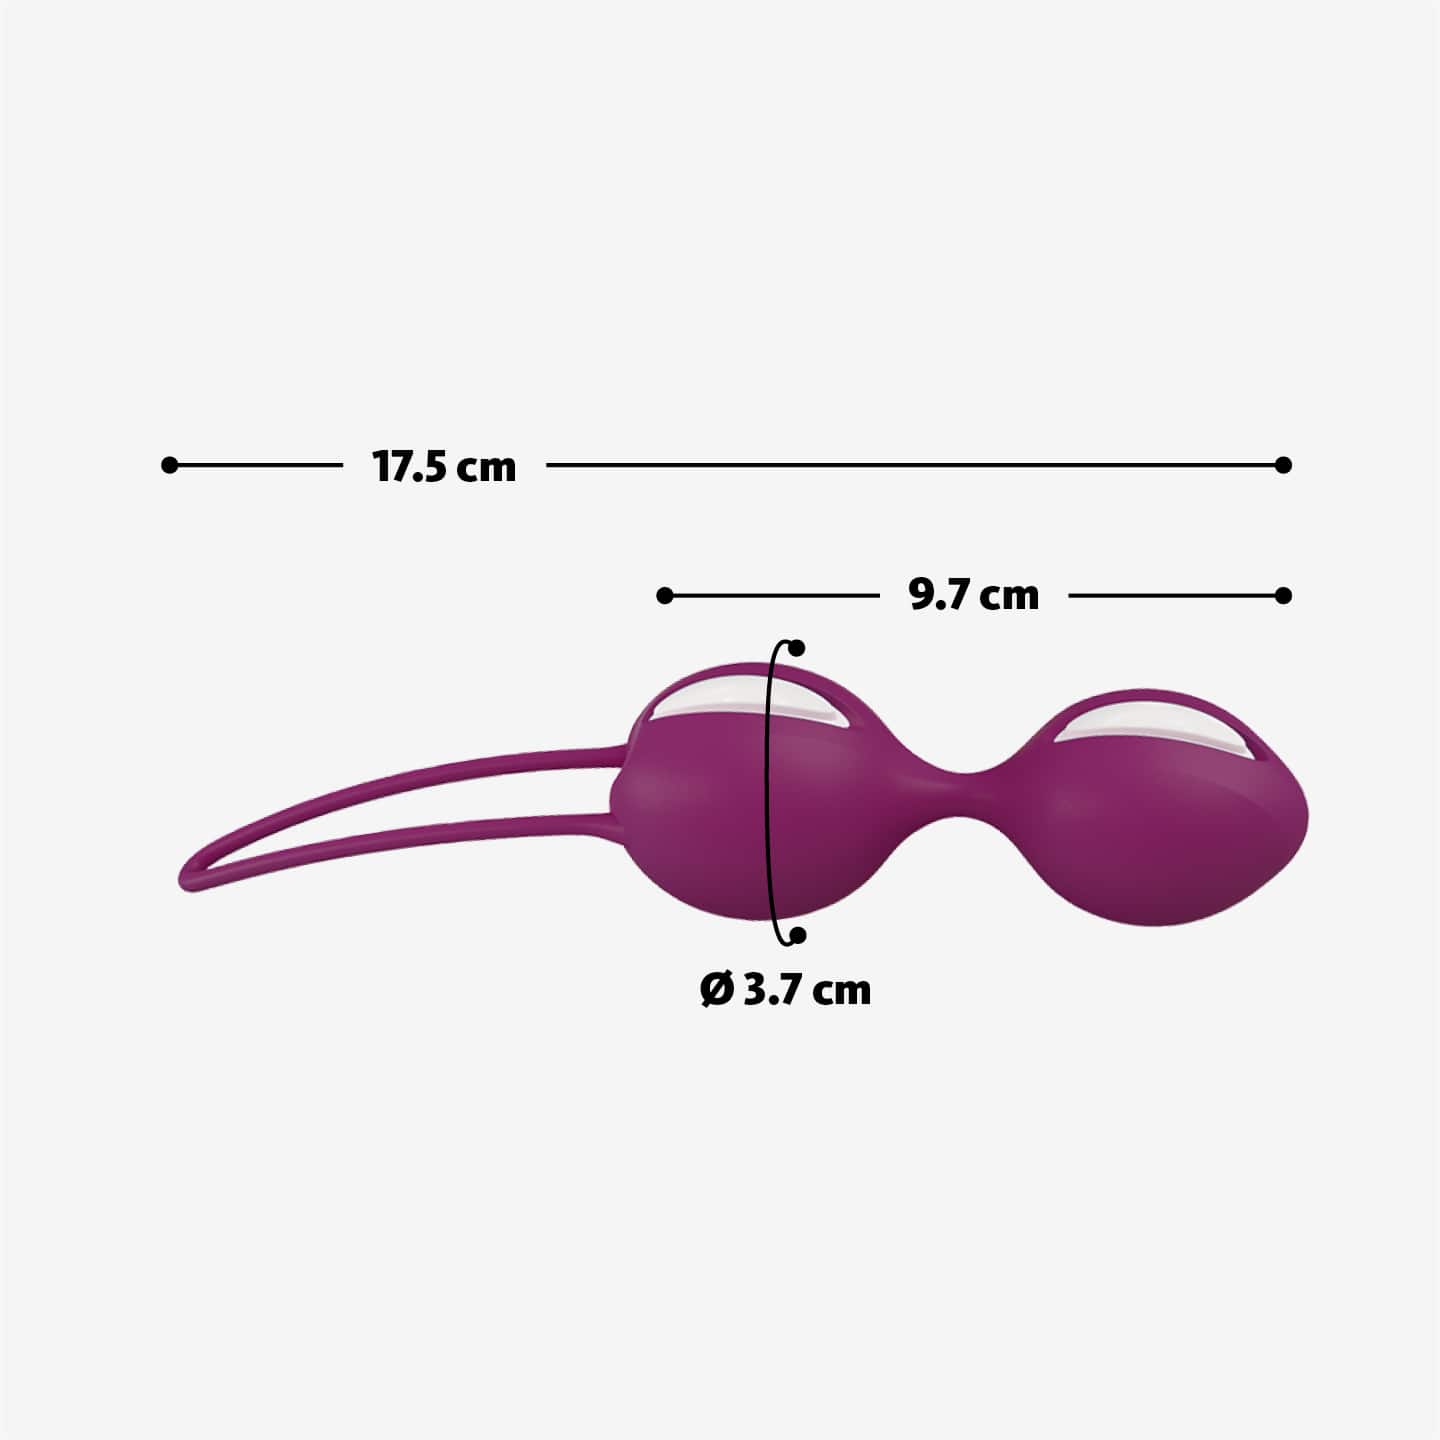 SMARTBALLS DUO grape kegel balls measurements